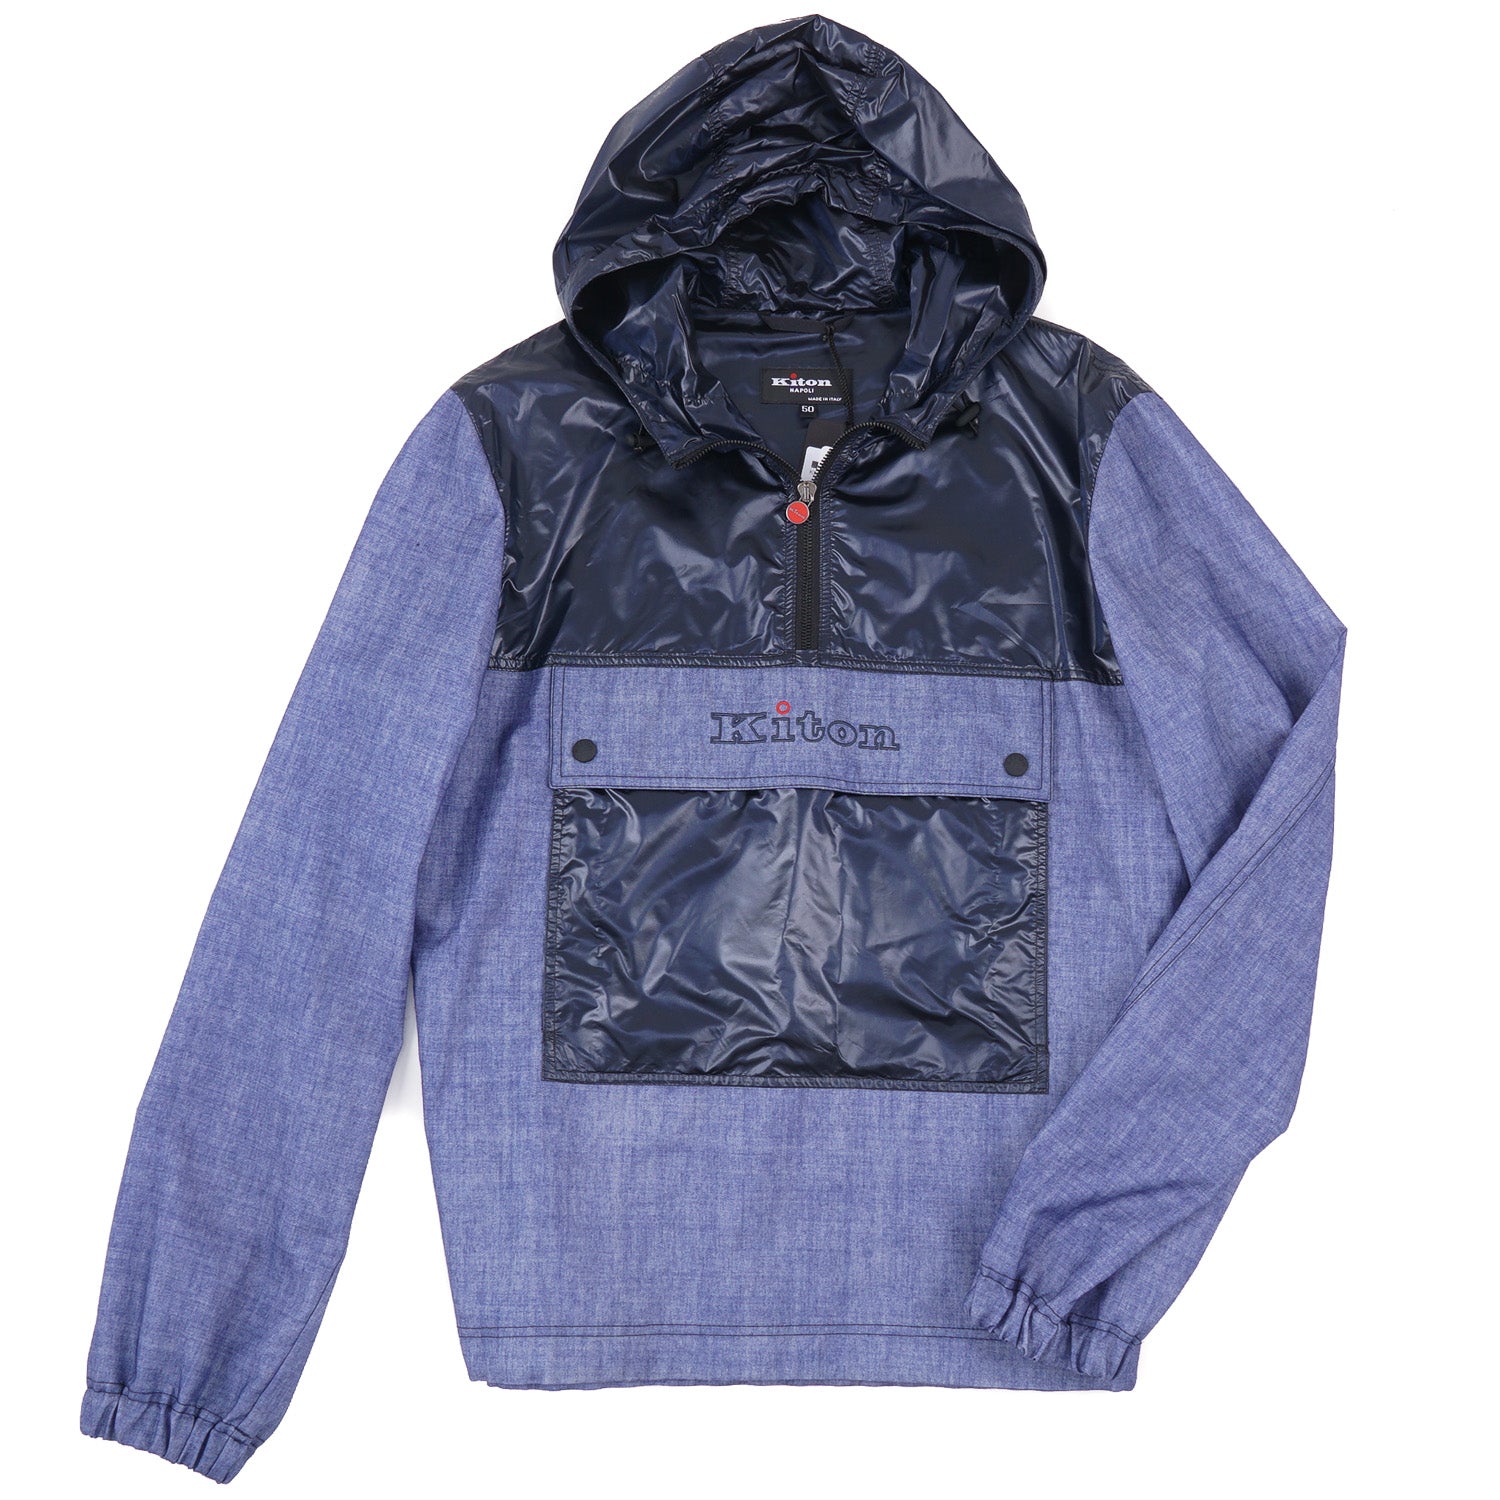 Kiton Techno Wool Anorak Jacket - Top Shelf Apparel